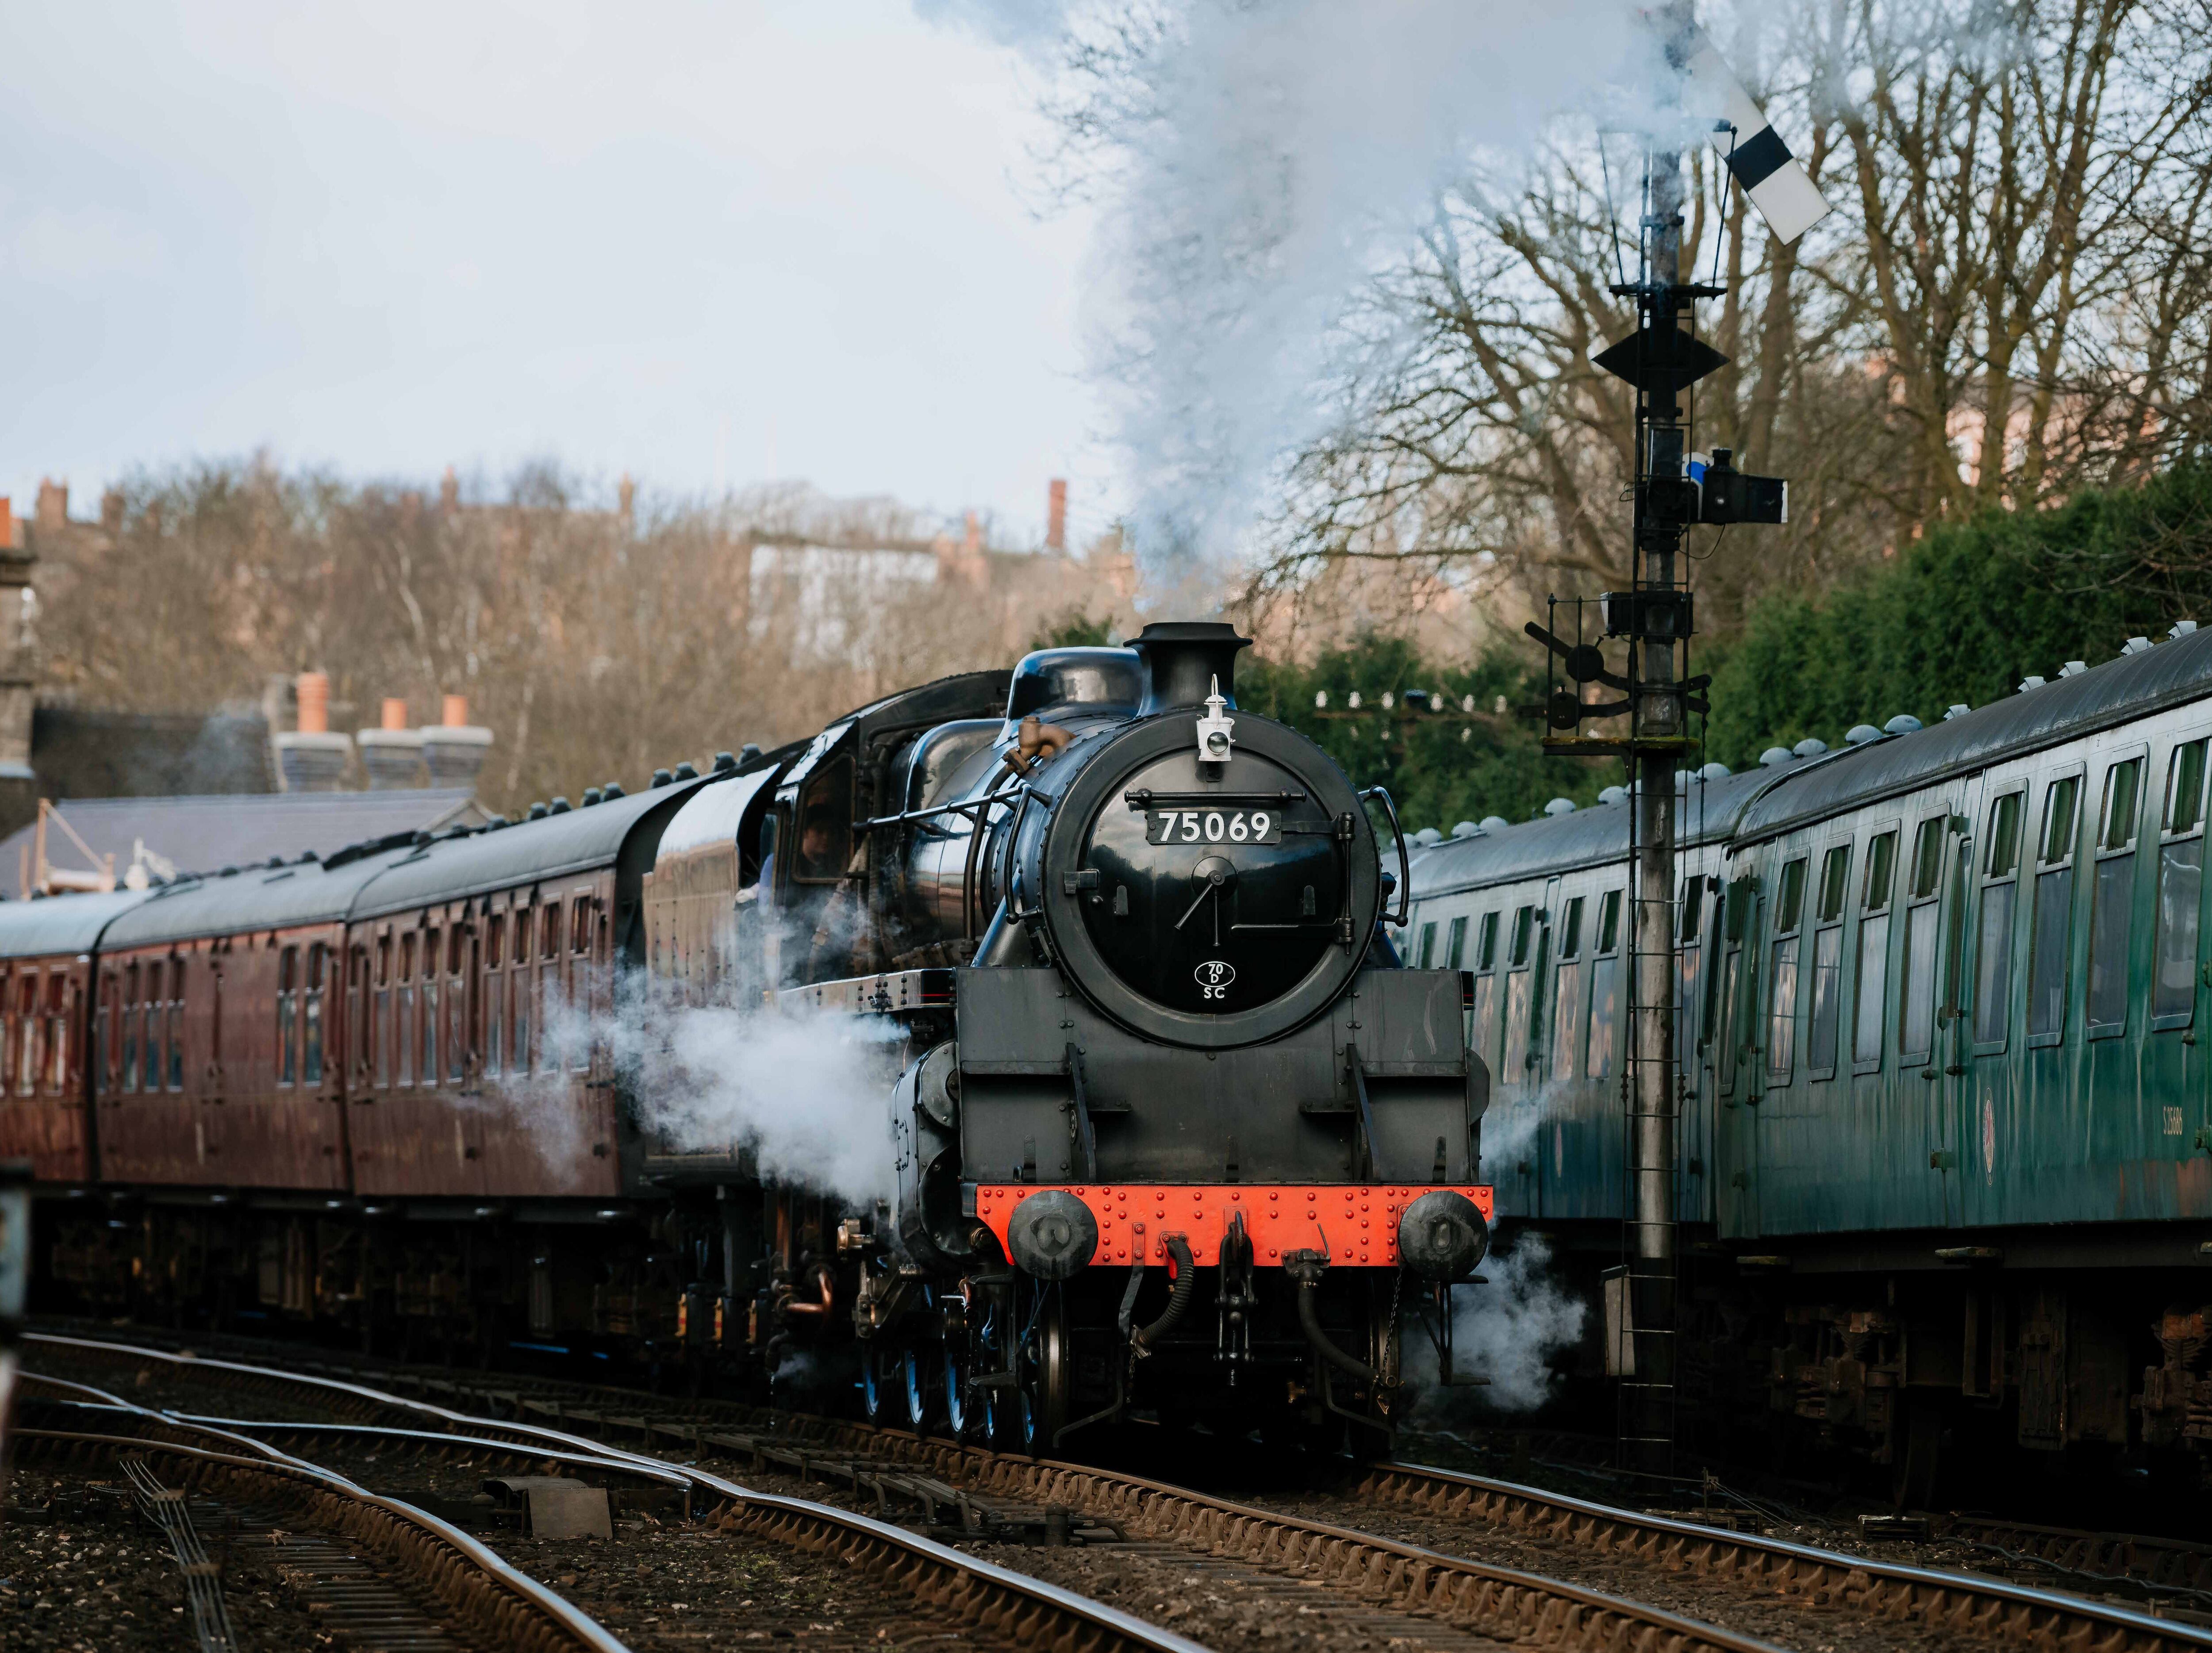 Severn Valley Railway postpones steam trains due to weather conditions 